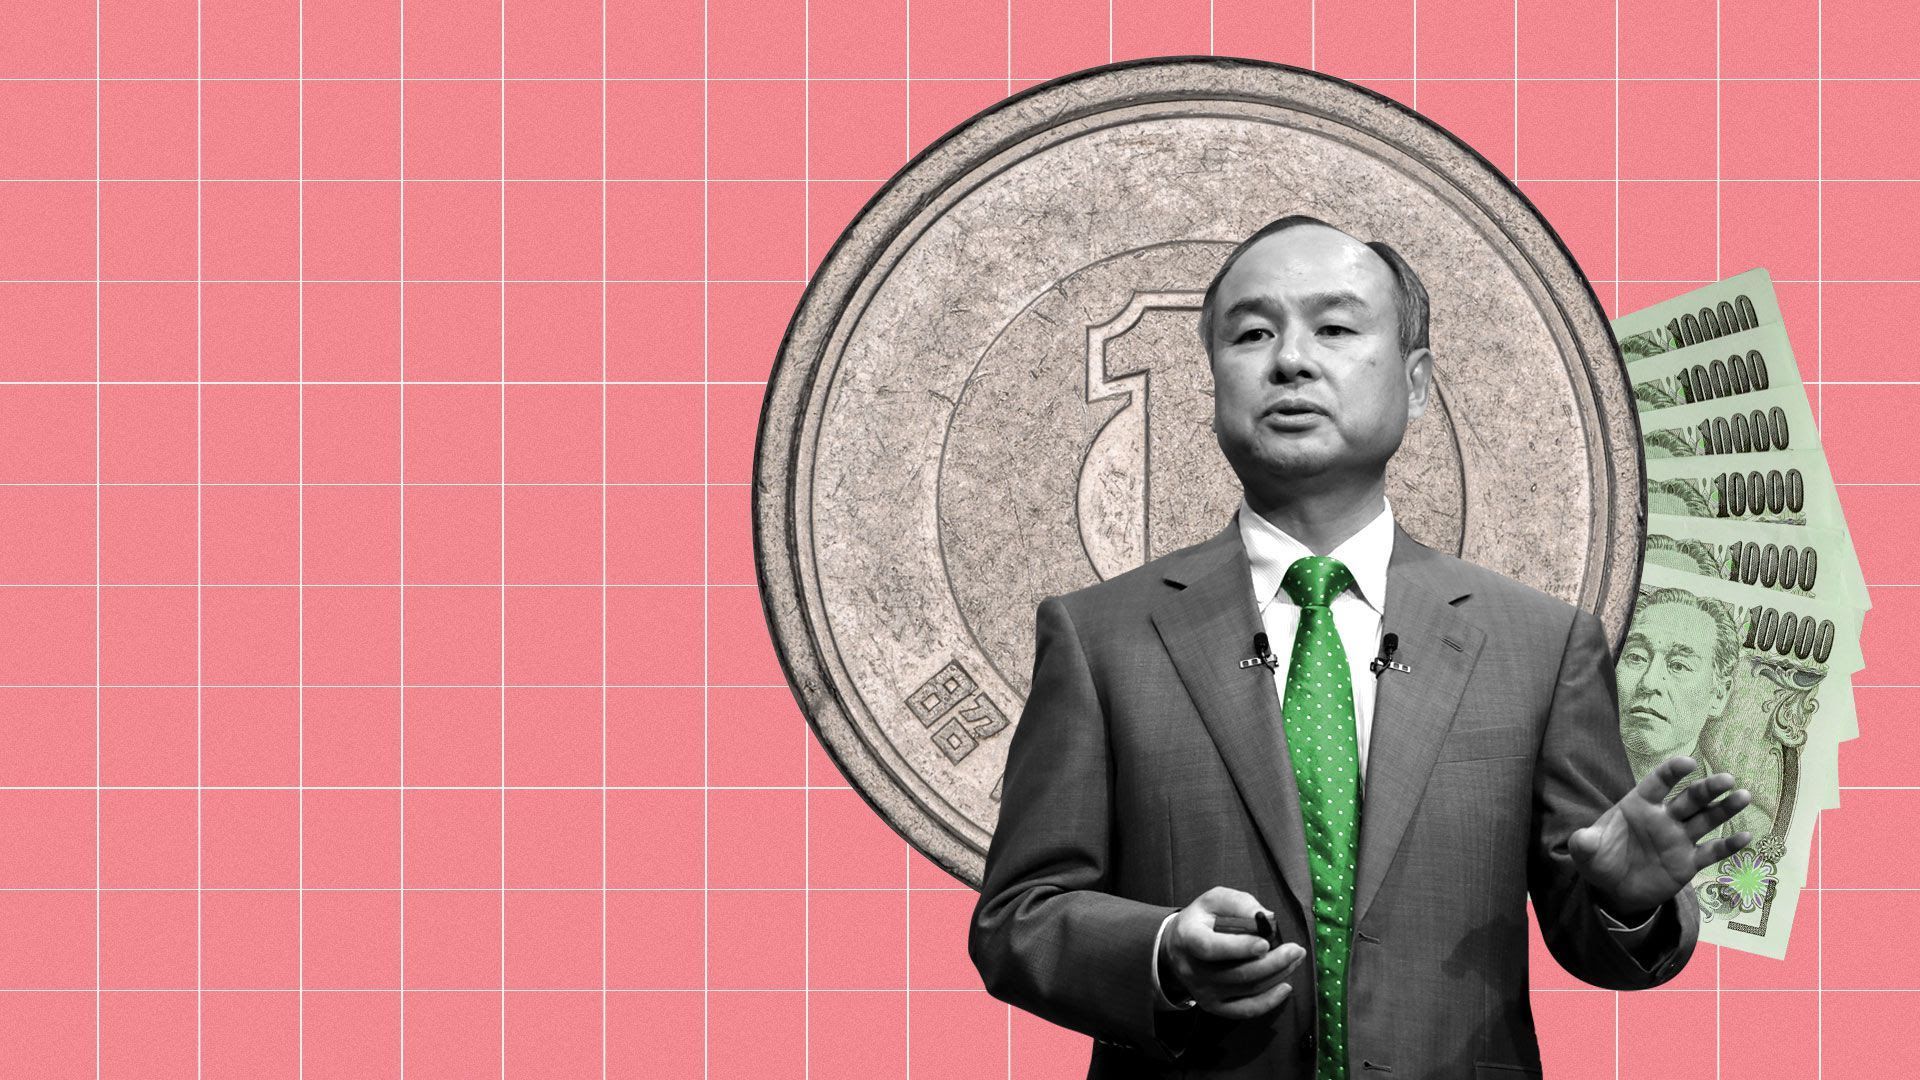 Illustration of SoftBank chairman Masayoshi Son in front of money